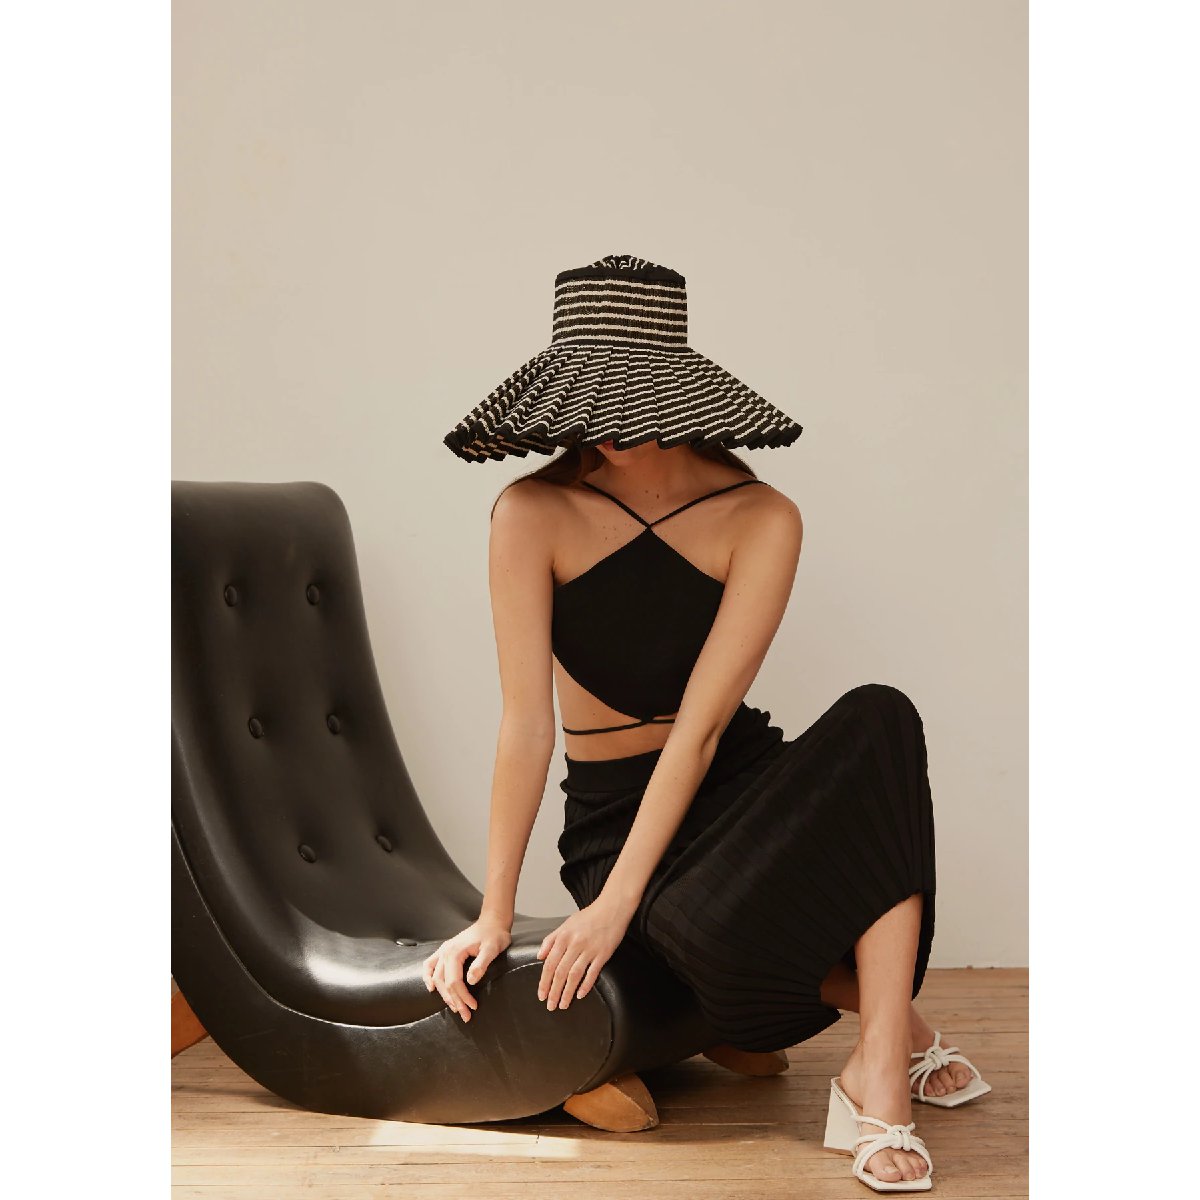 Lorna Murray | "Island Capri" hat | medium adult | malta - wear